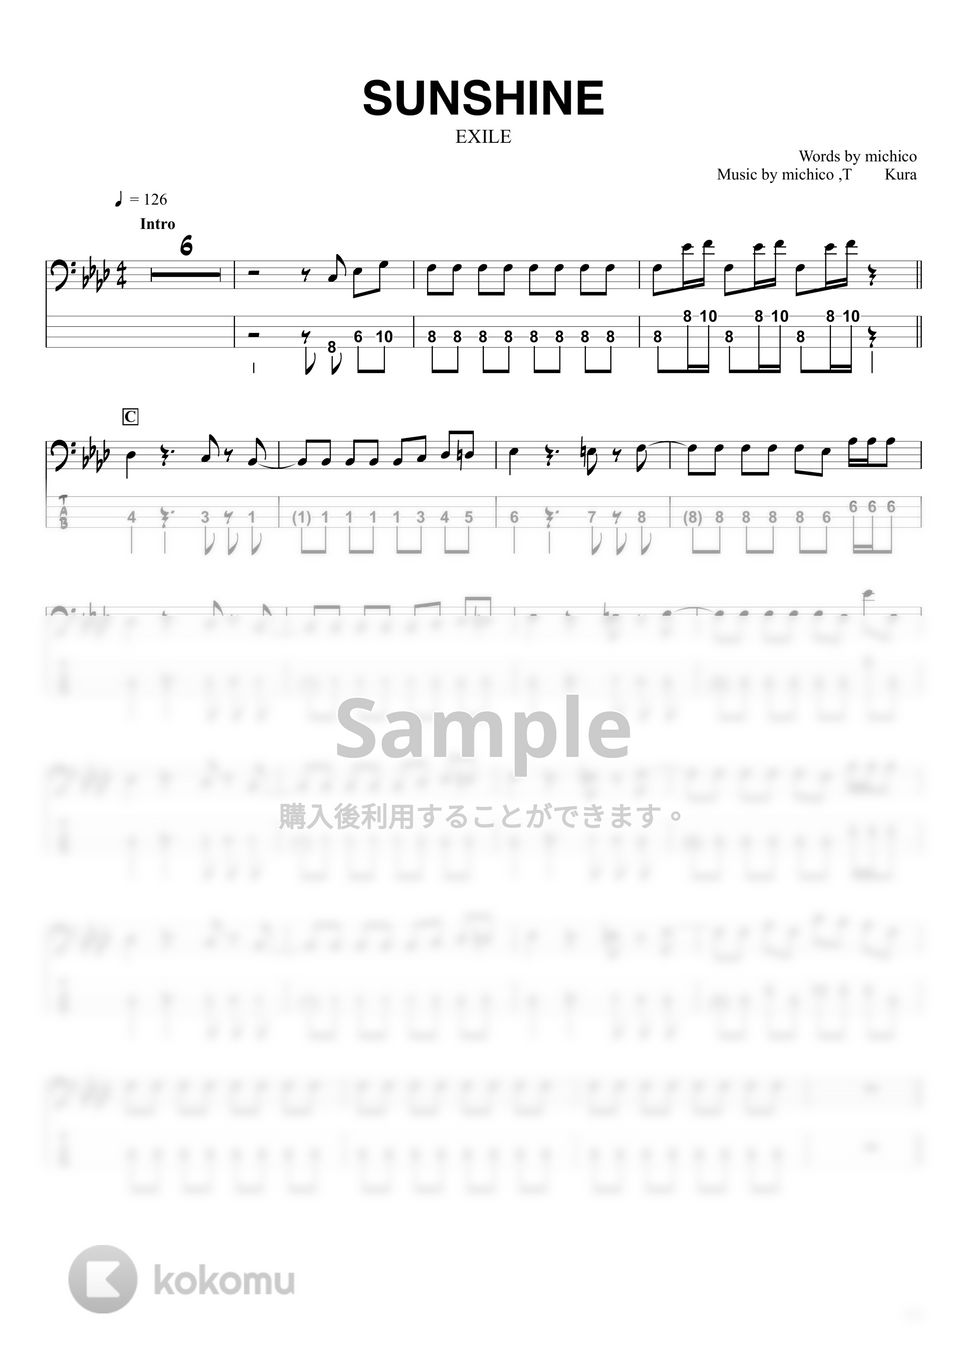 EXILE - SUNSHINE (『ベースTAB譜』☆4弦ベース対応) by swbass